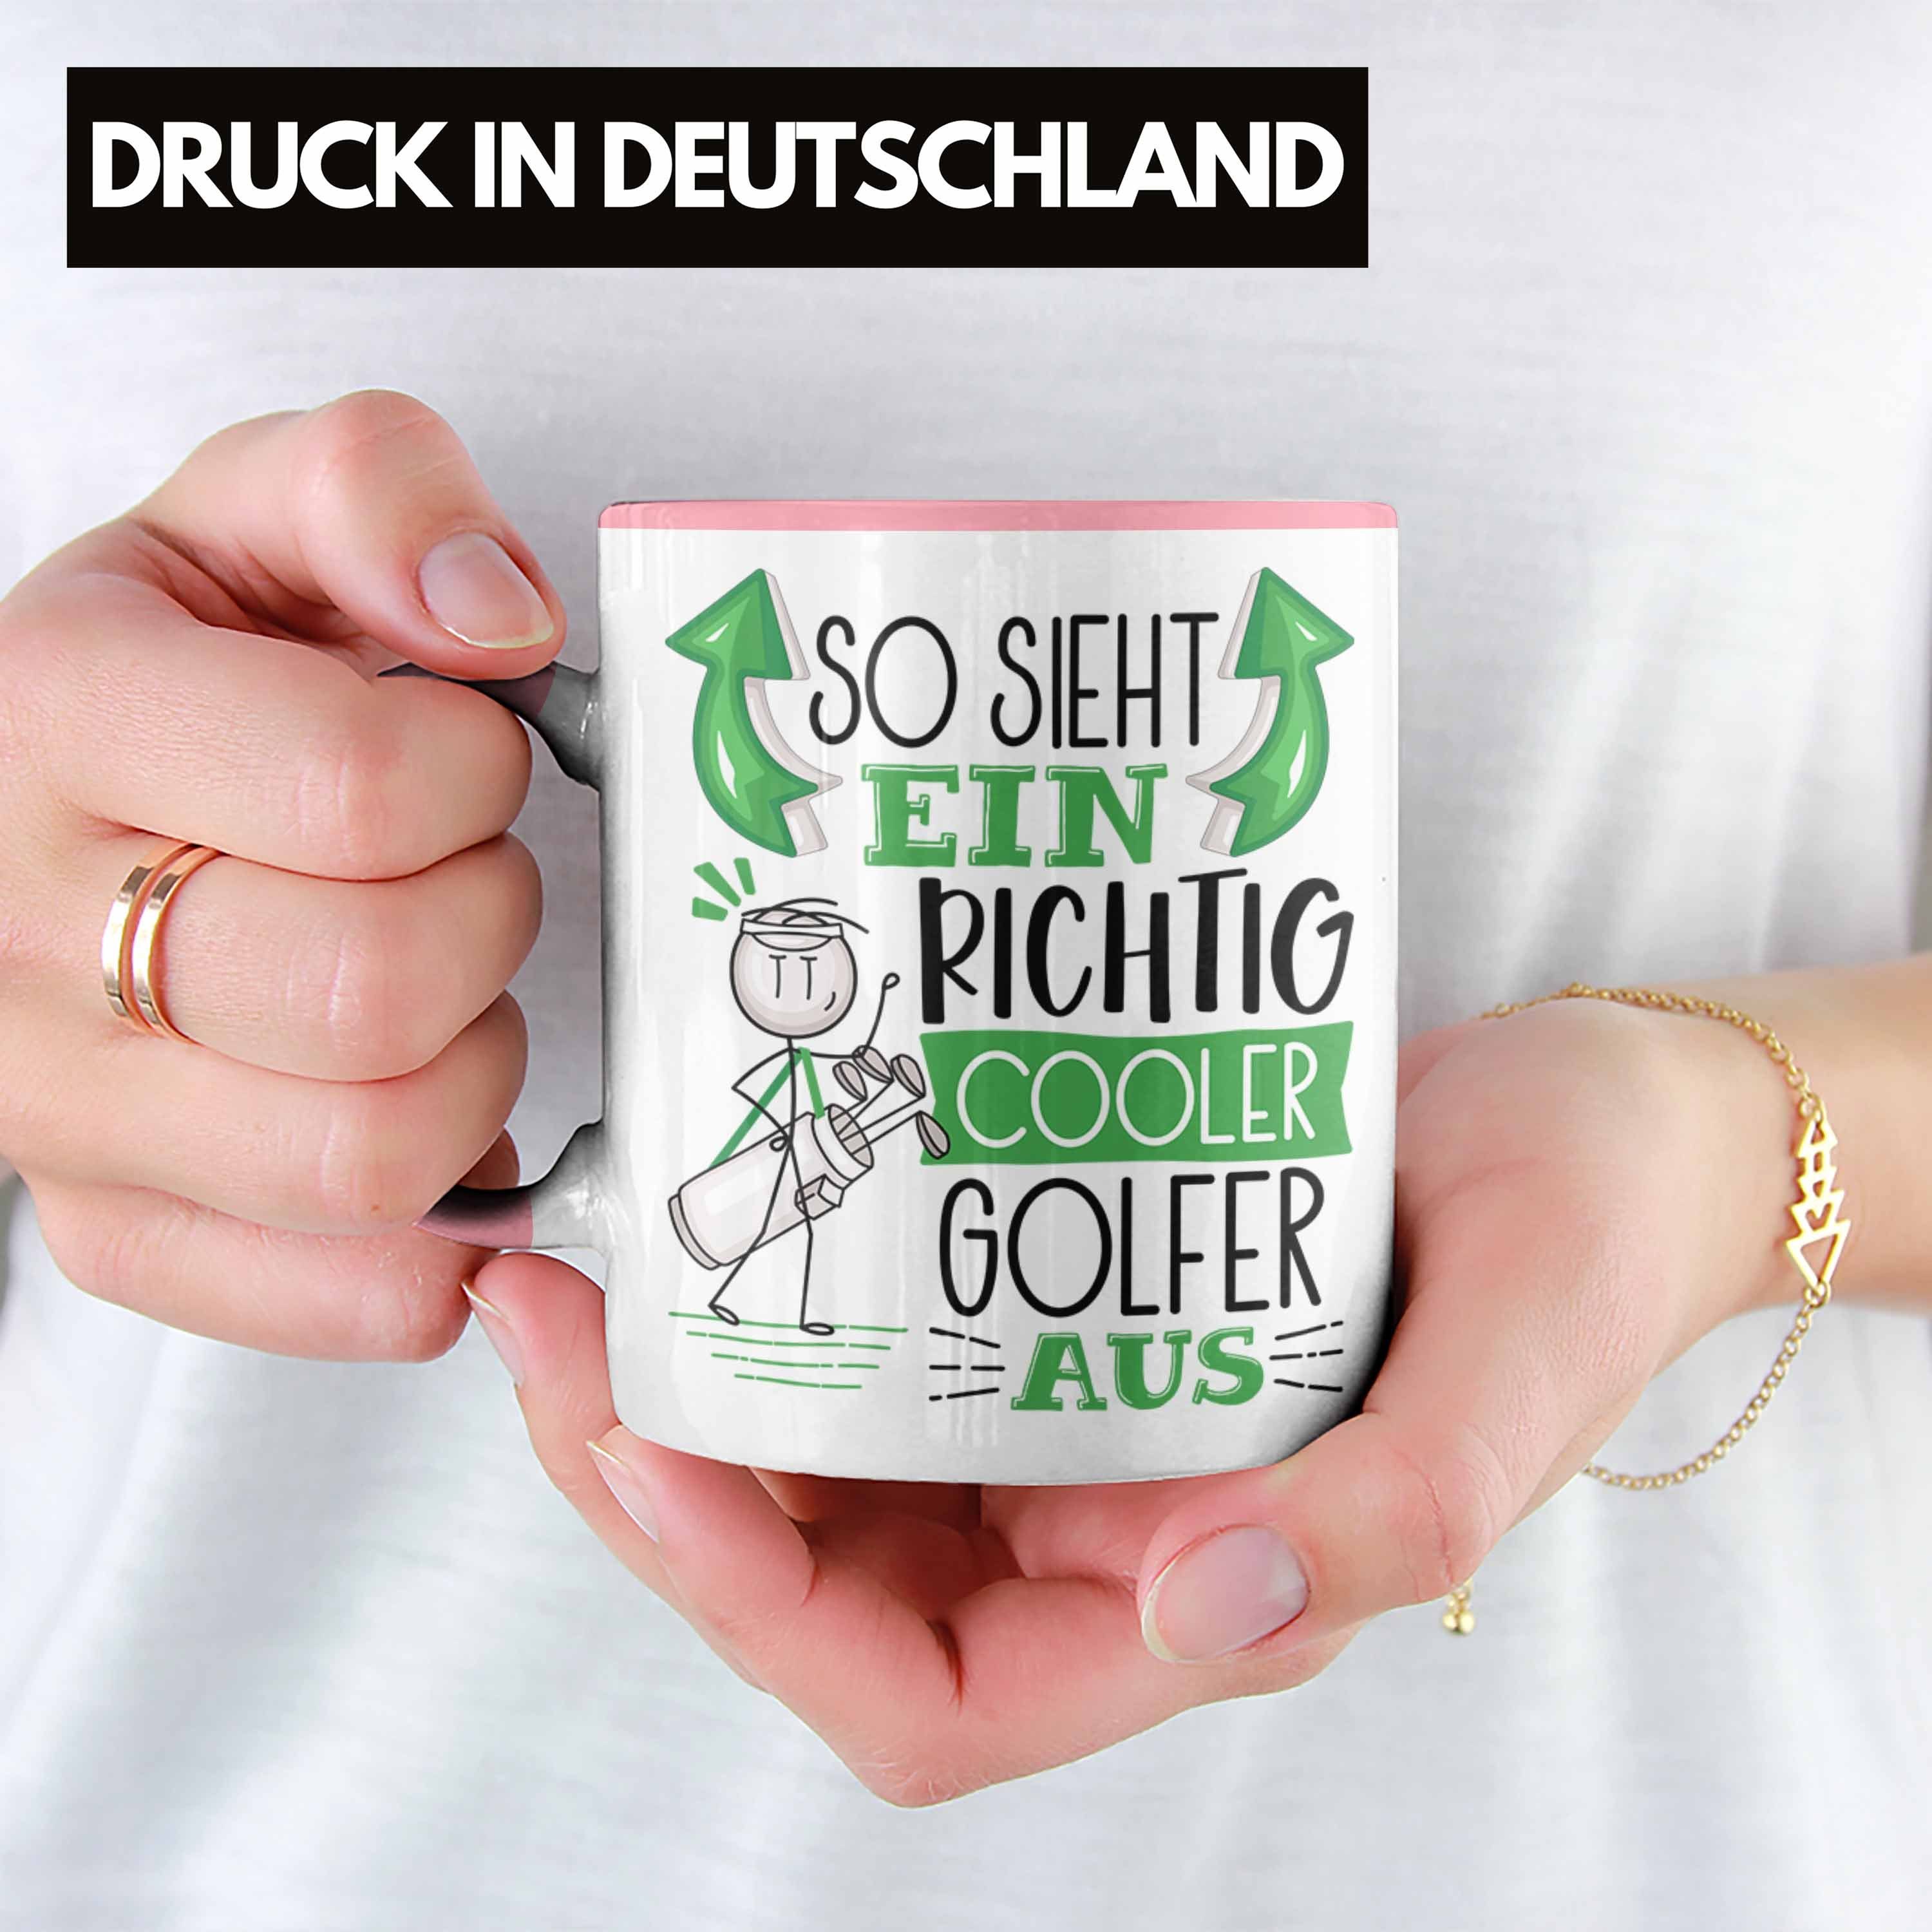 Trendation Tasse Golf-Spieler Rosa Sieht Richtig Cooler Ein Tasse Golf-Spieler Geschenk So